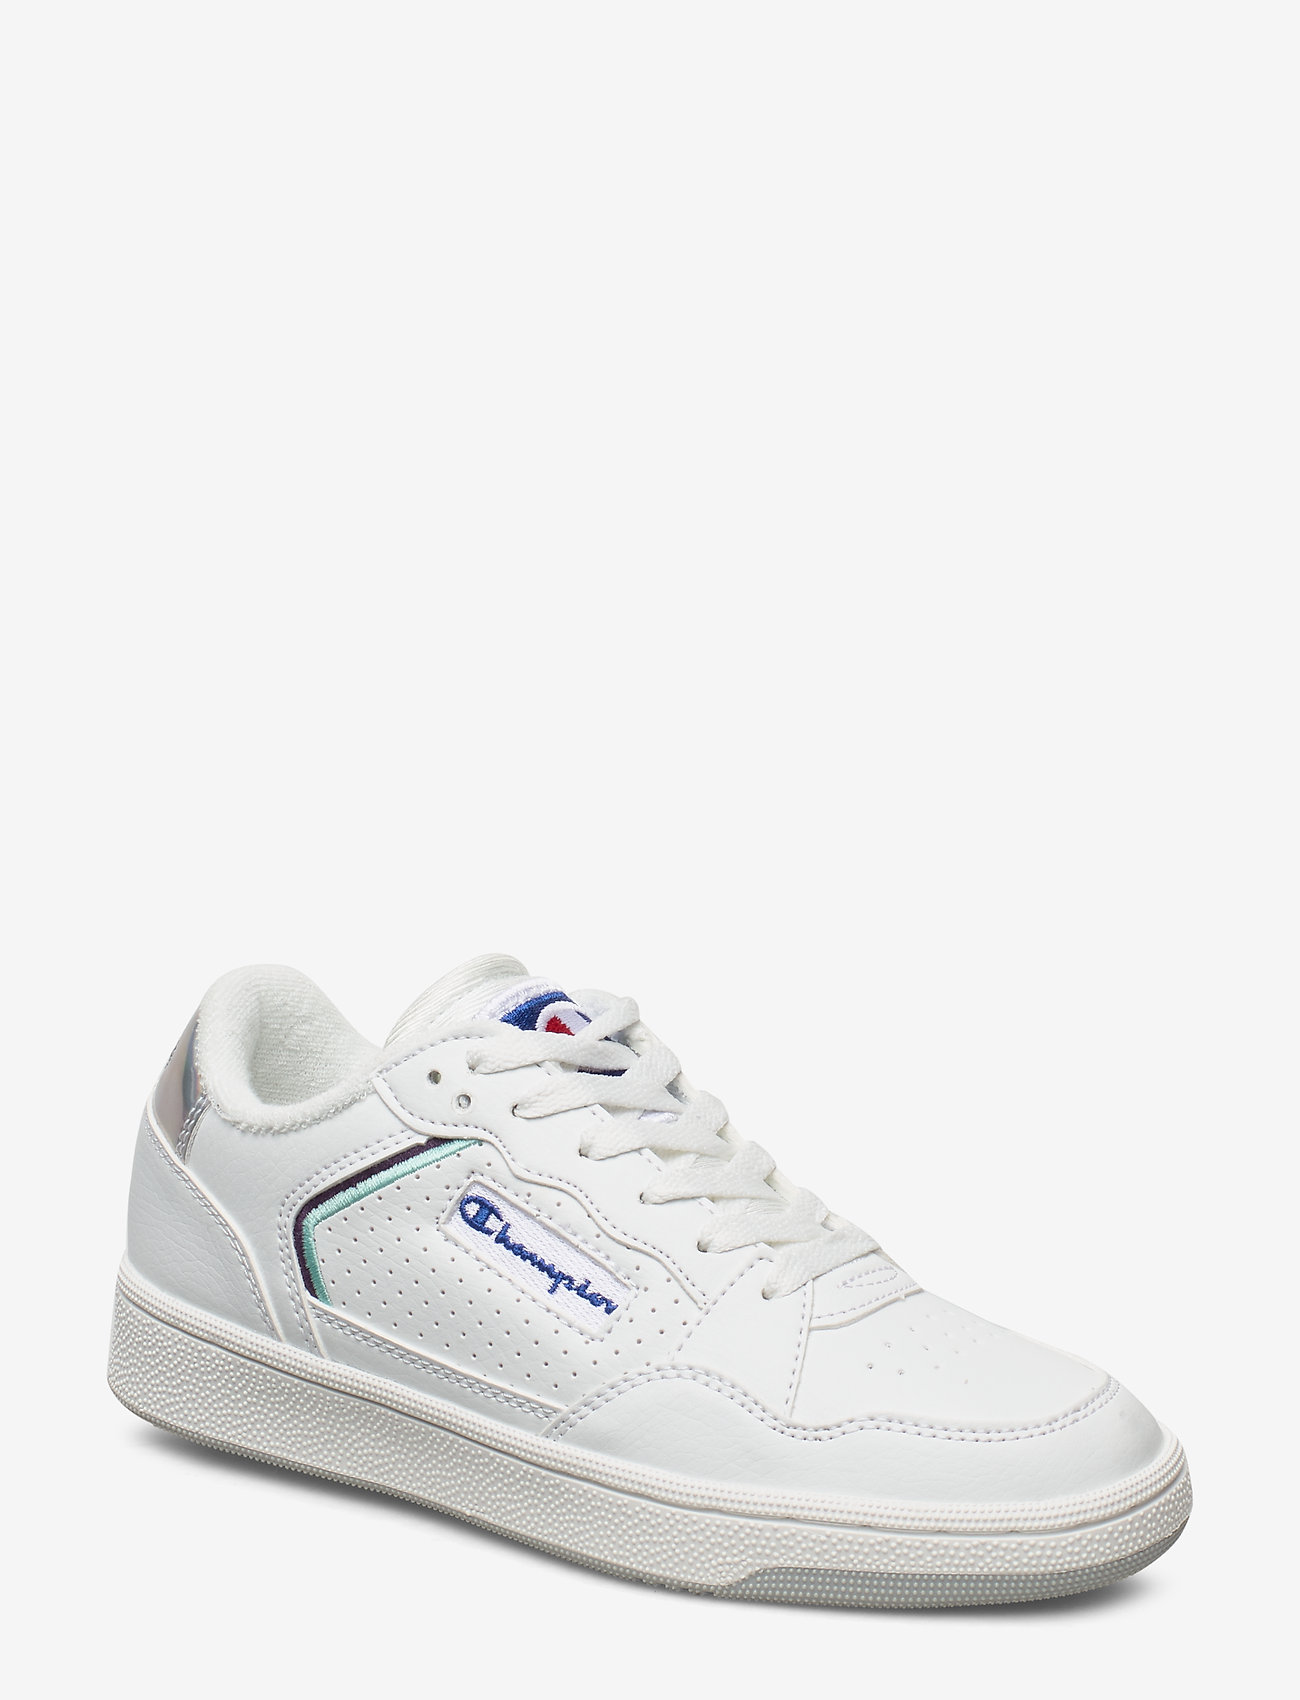 Low Cut Shoe Arizona (White) (39 